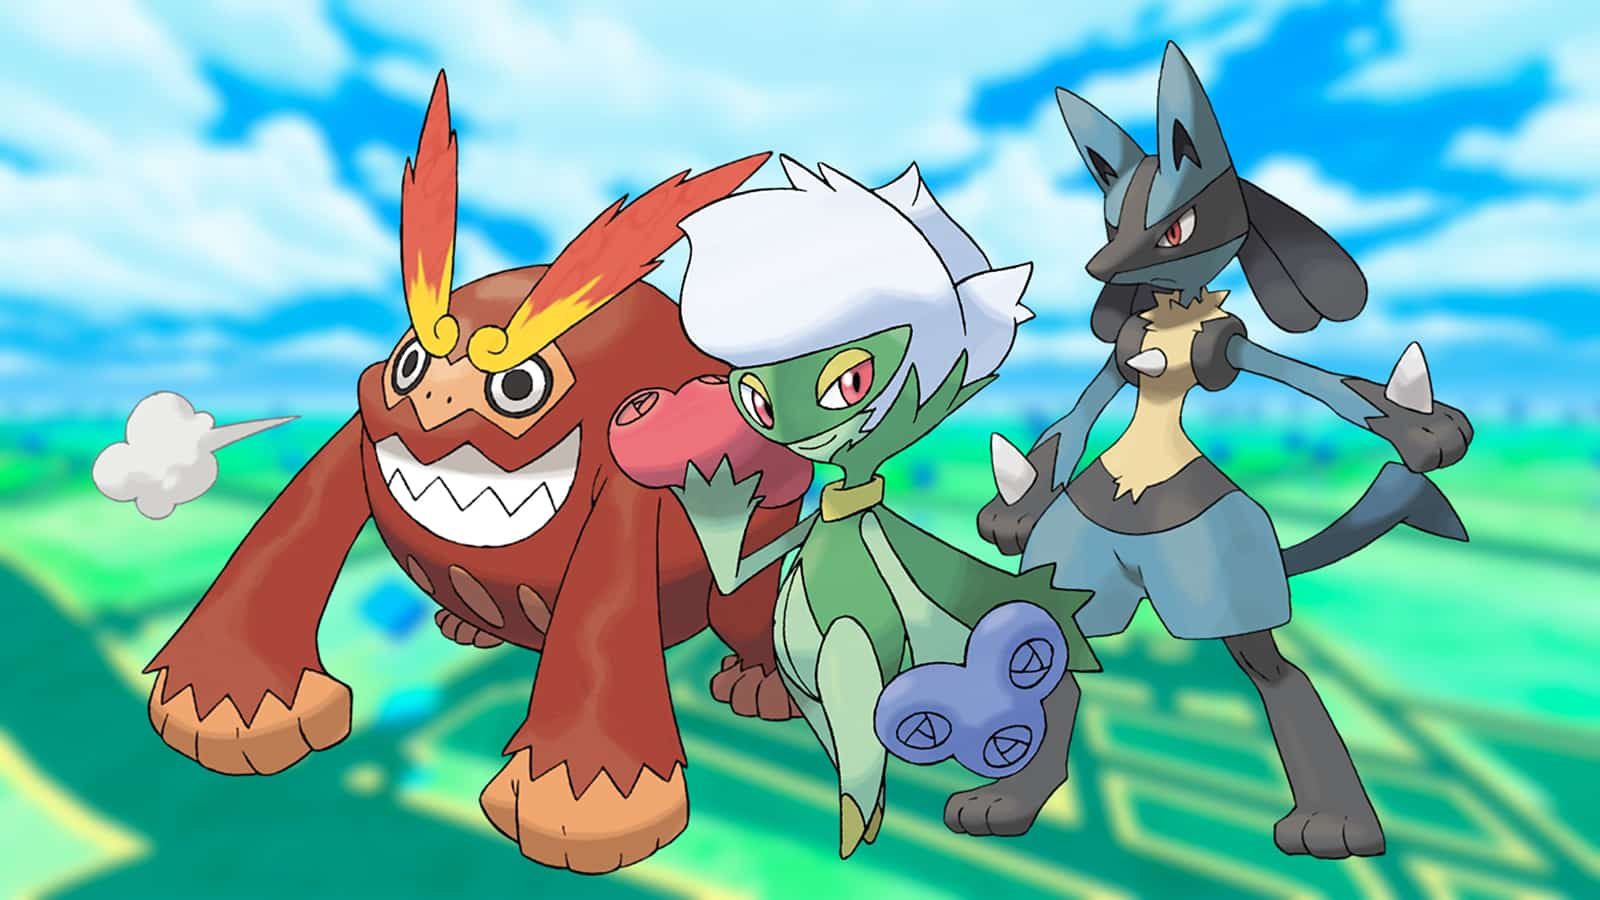 An image of Sierra's beat team in Pokemon Go